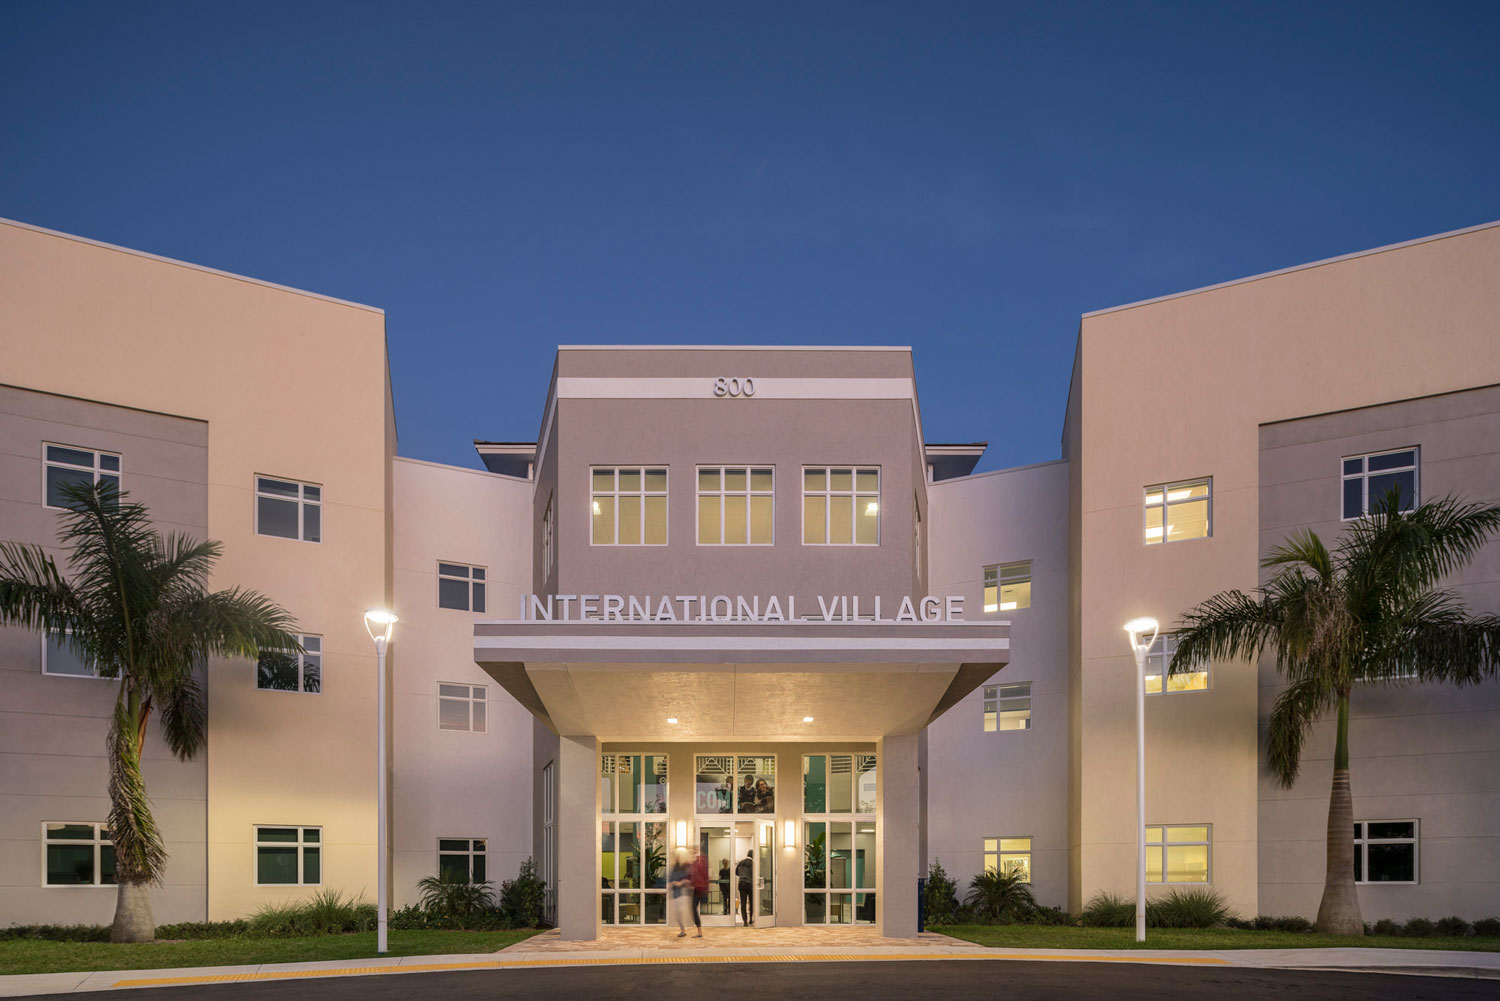 North Broward Preparatory School Residential Village, Coconut Creek, FL